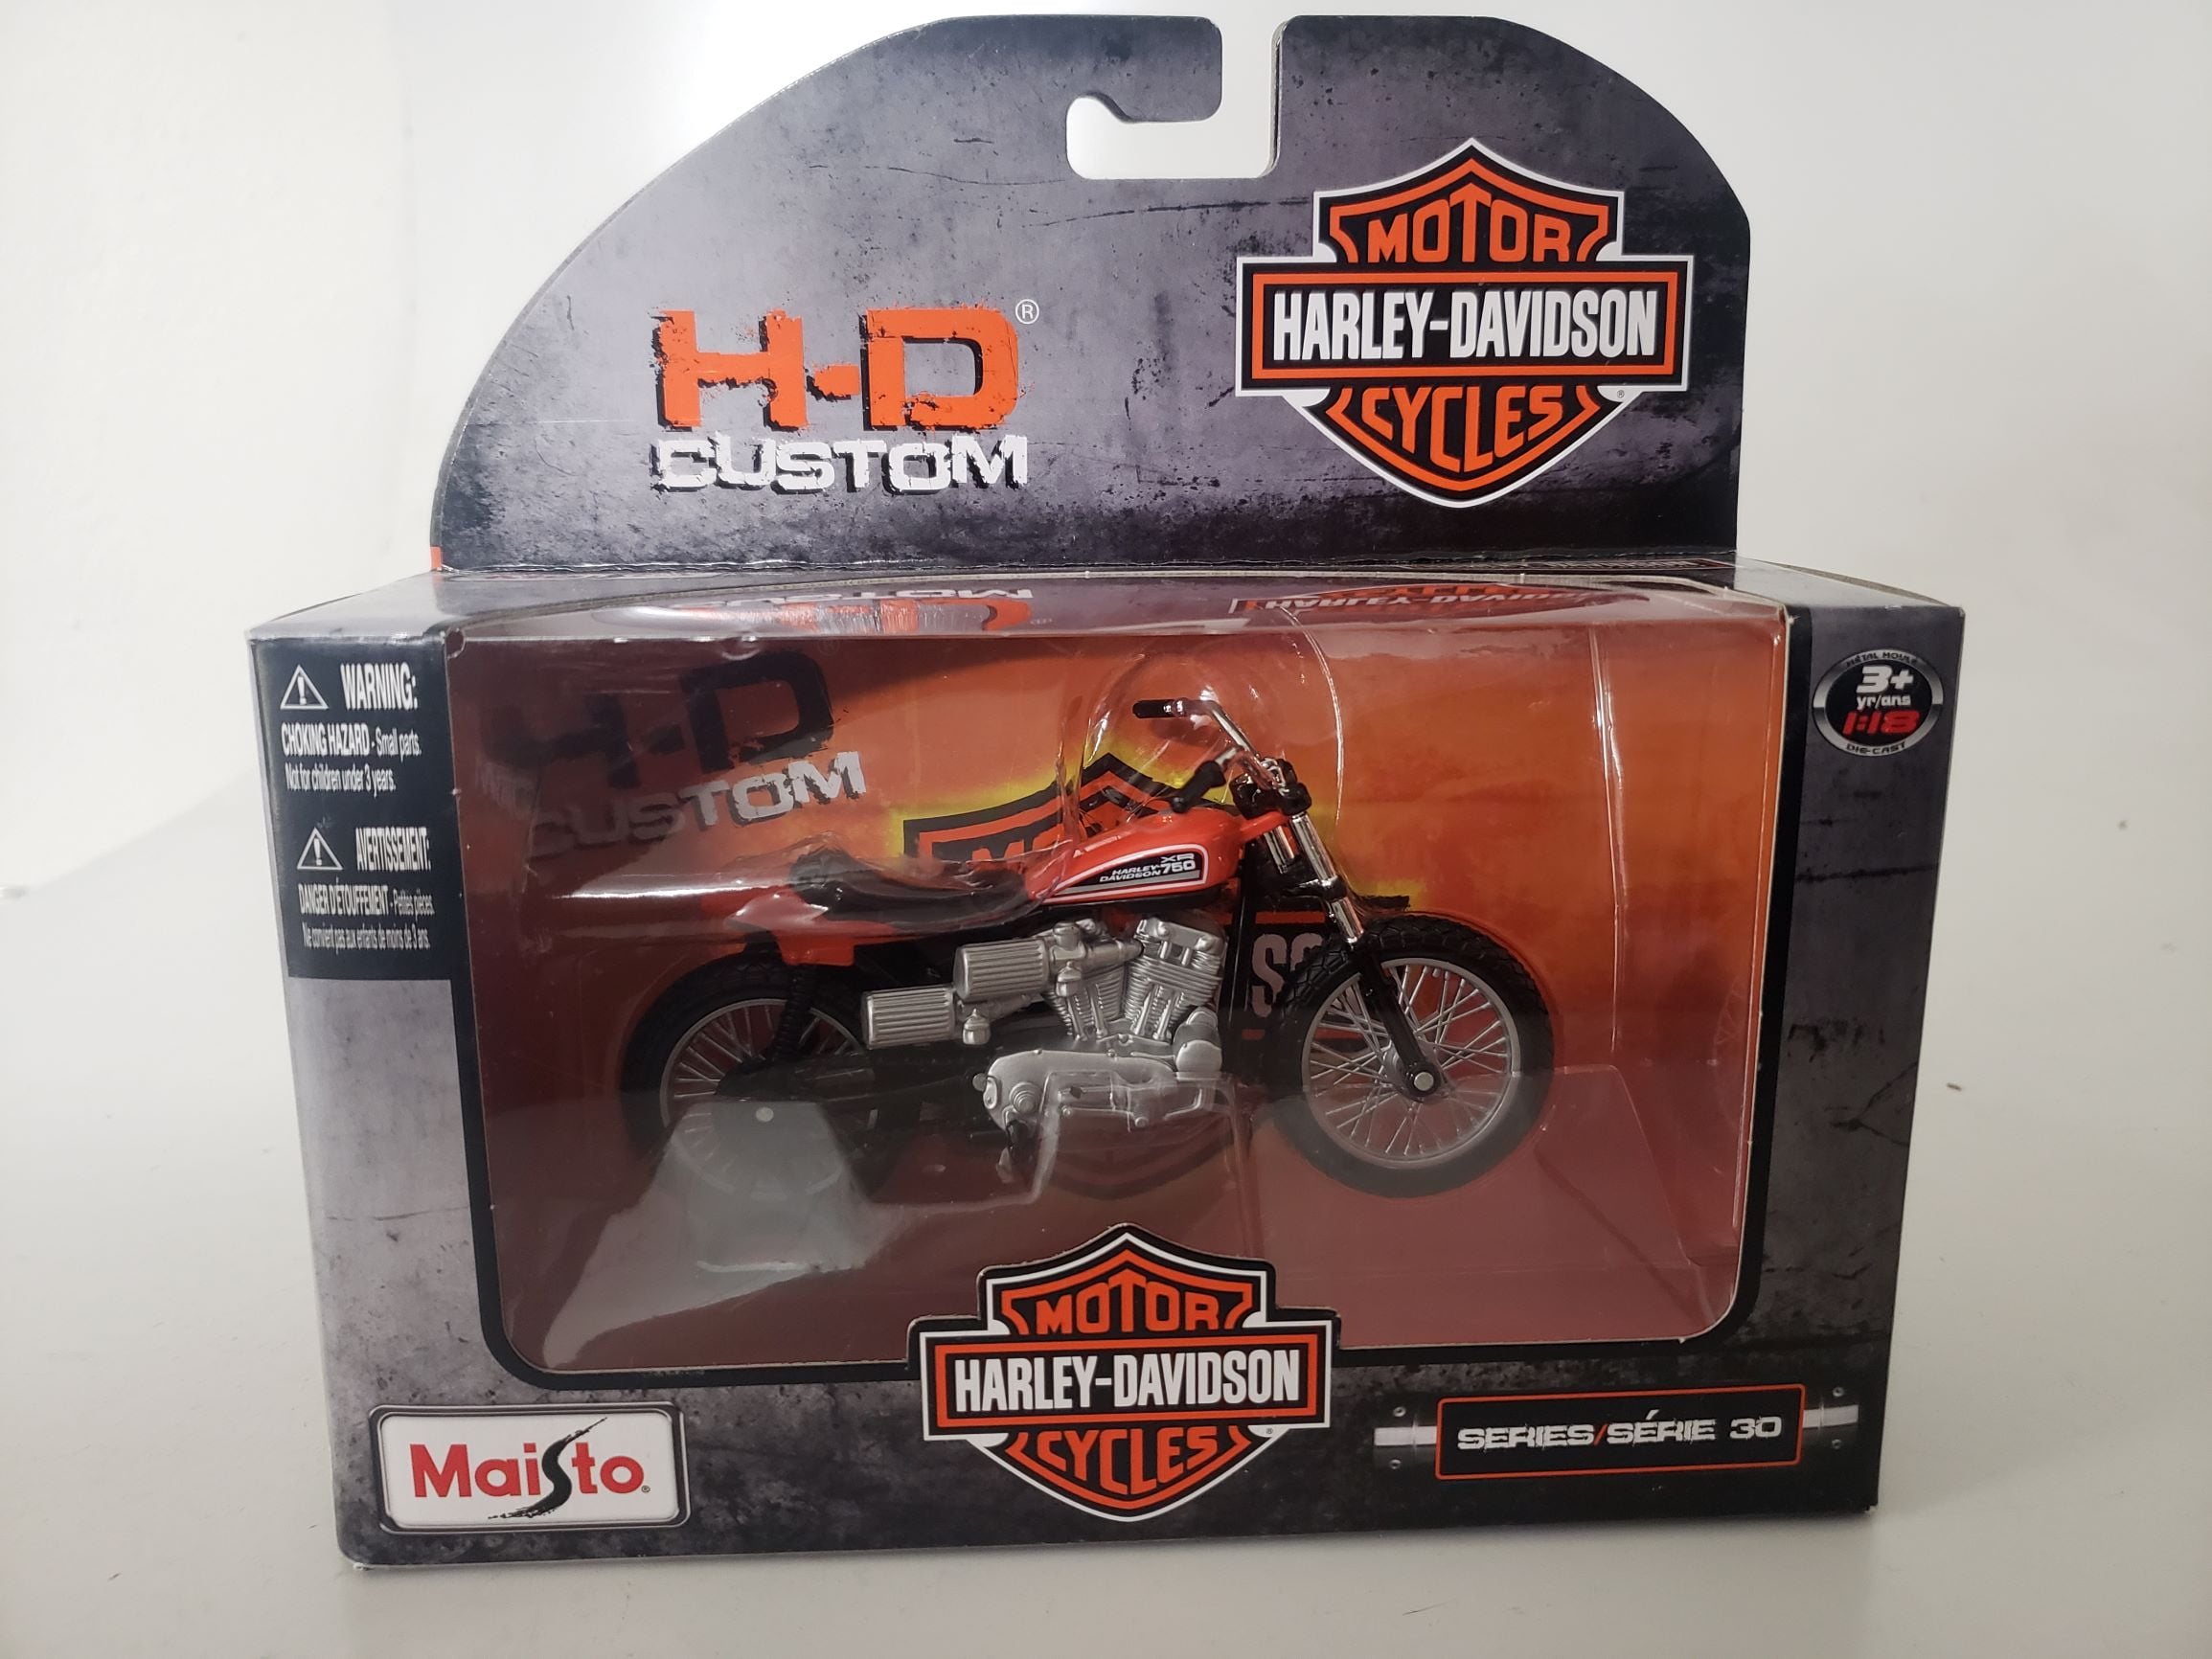 Harley-Davidson Motorcycles Coffret cadeau par Harley Roadhouse